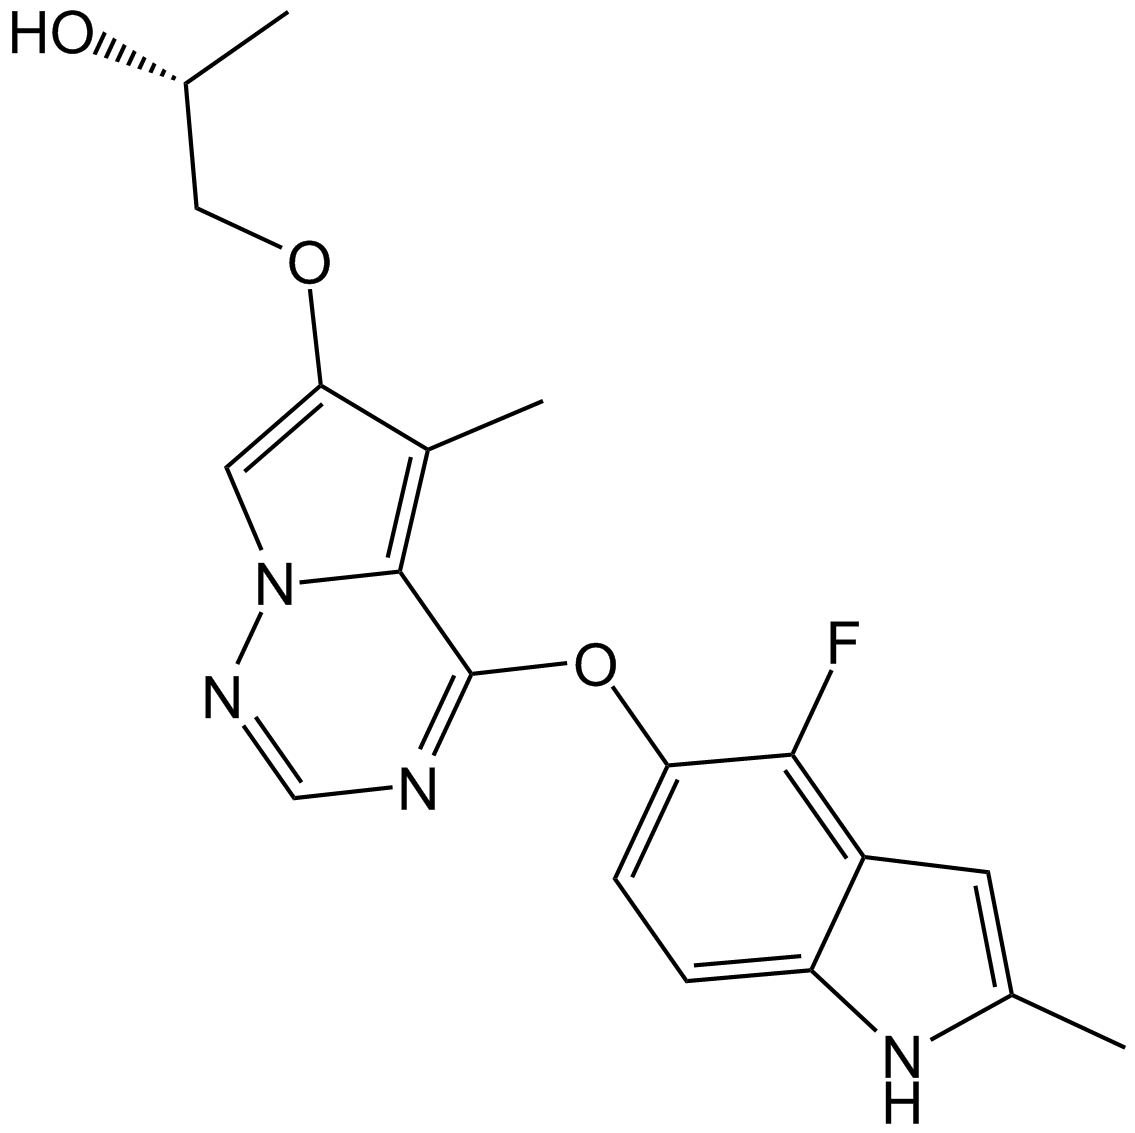 Brivanib (BMS-540215)